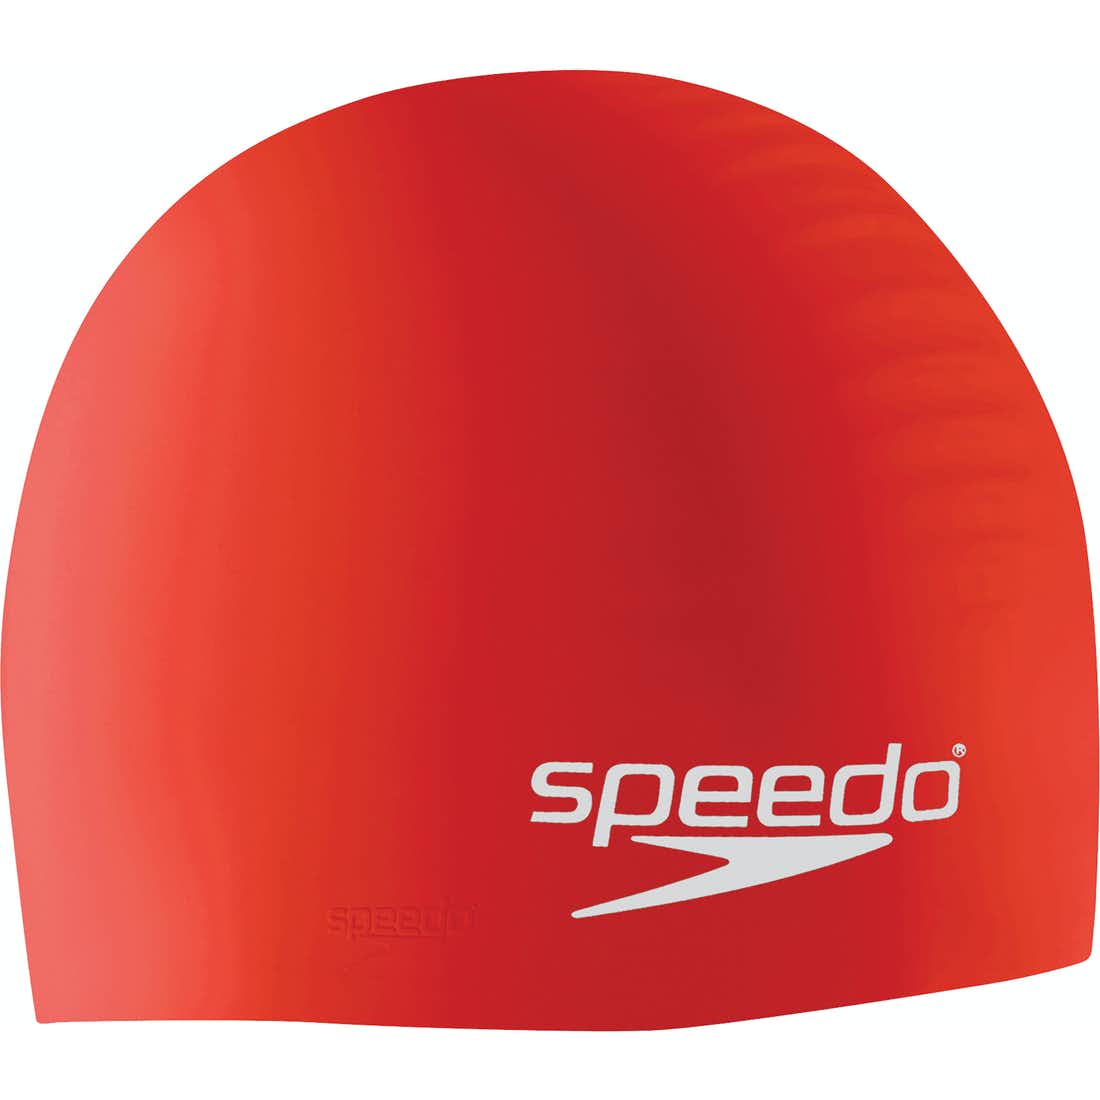 Speedo Silicone Swim Caps